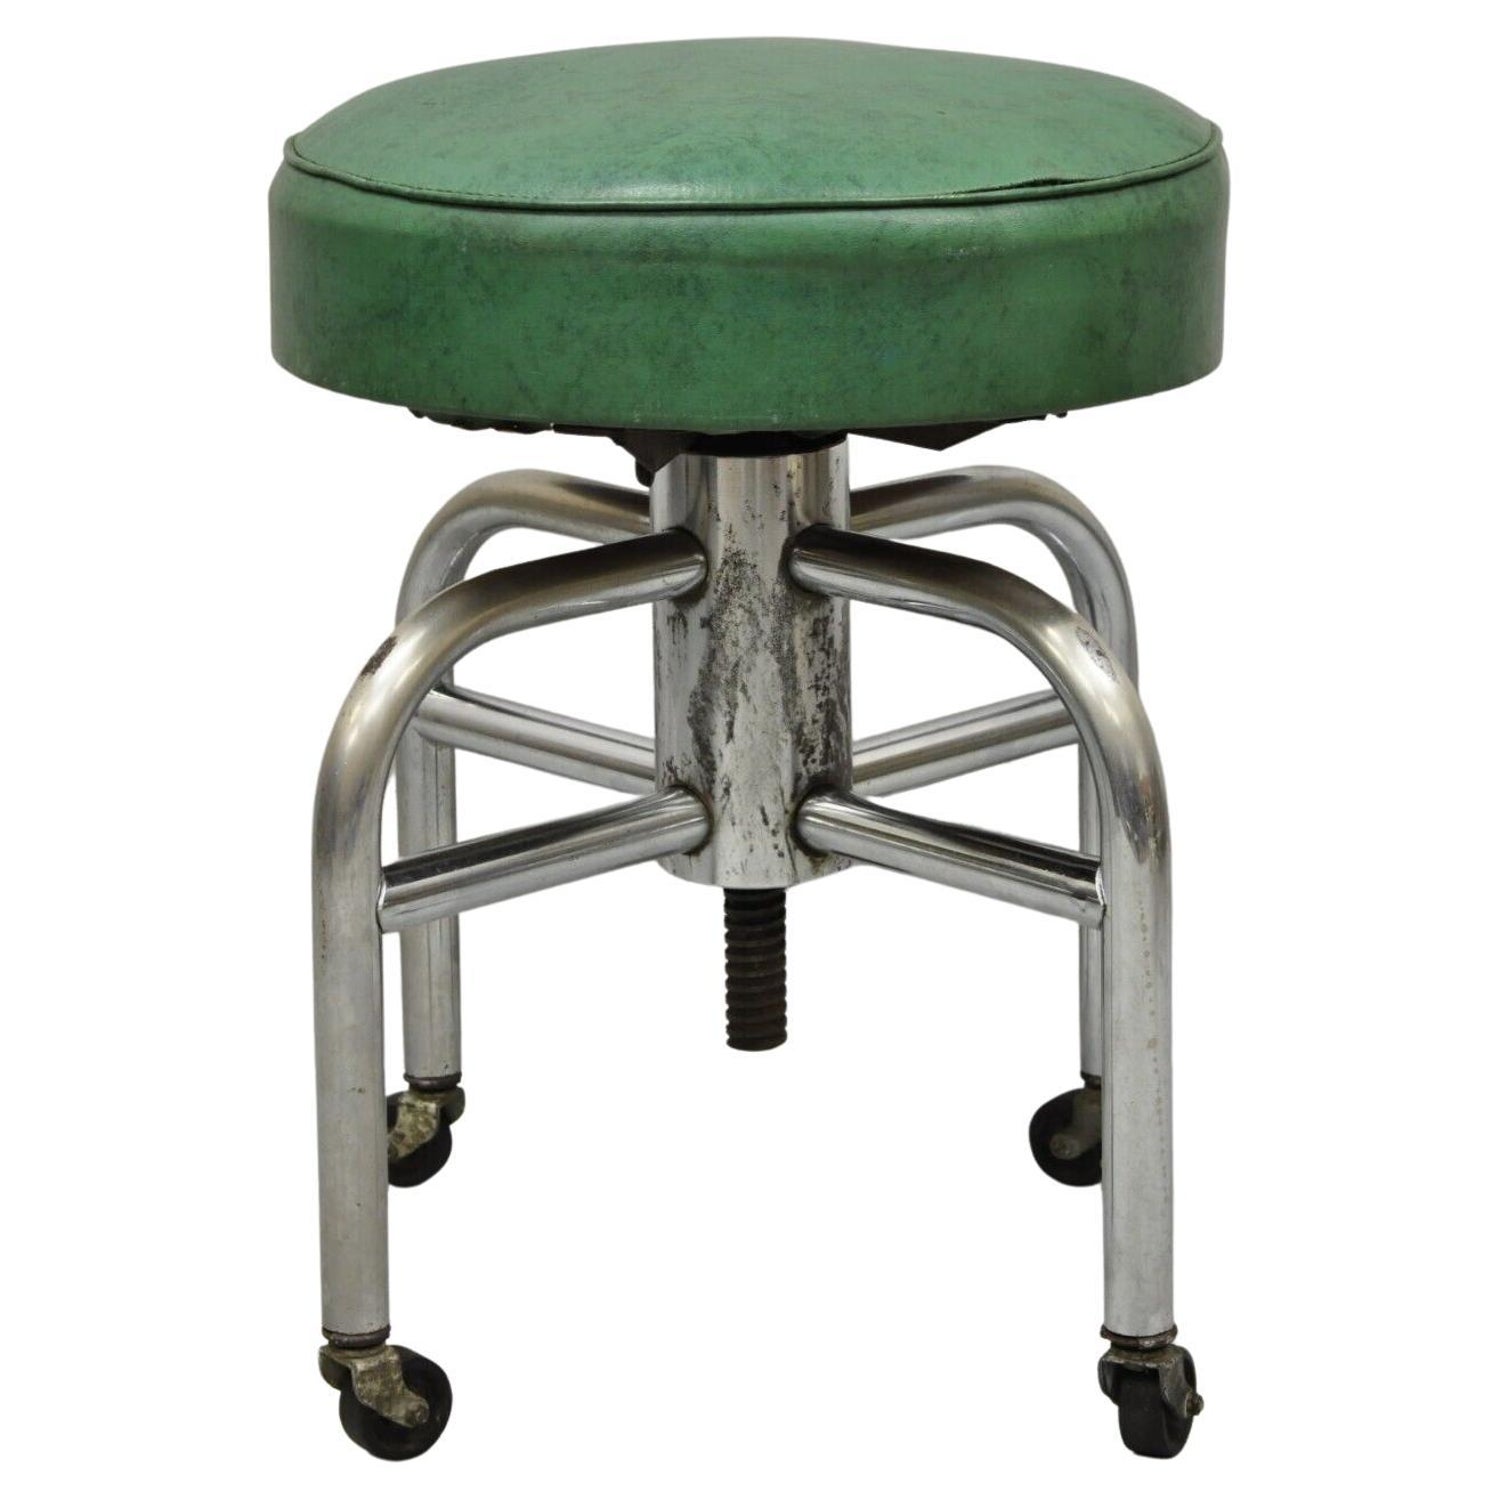 https://a.1stdibscdn.com/antique-american-industrial-metal-green-vinyl-rolling-work-stool-seat-for-sale/f_9341/f_293933021656699403696/f_29393302_1656699404038_bg_processed.jpg?width=1500